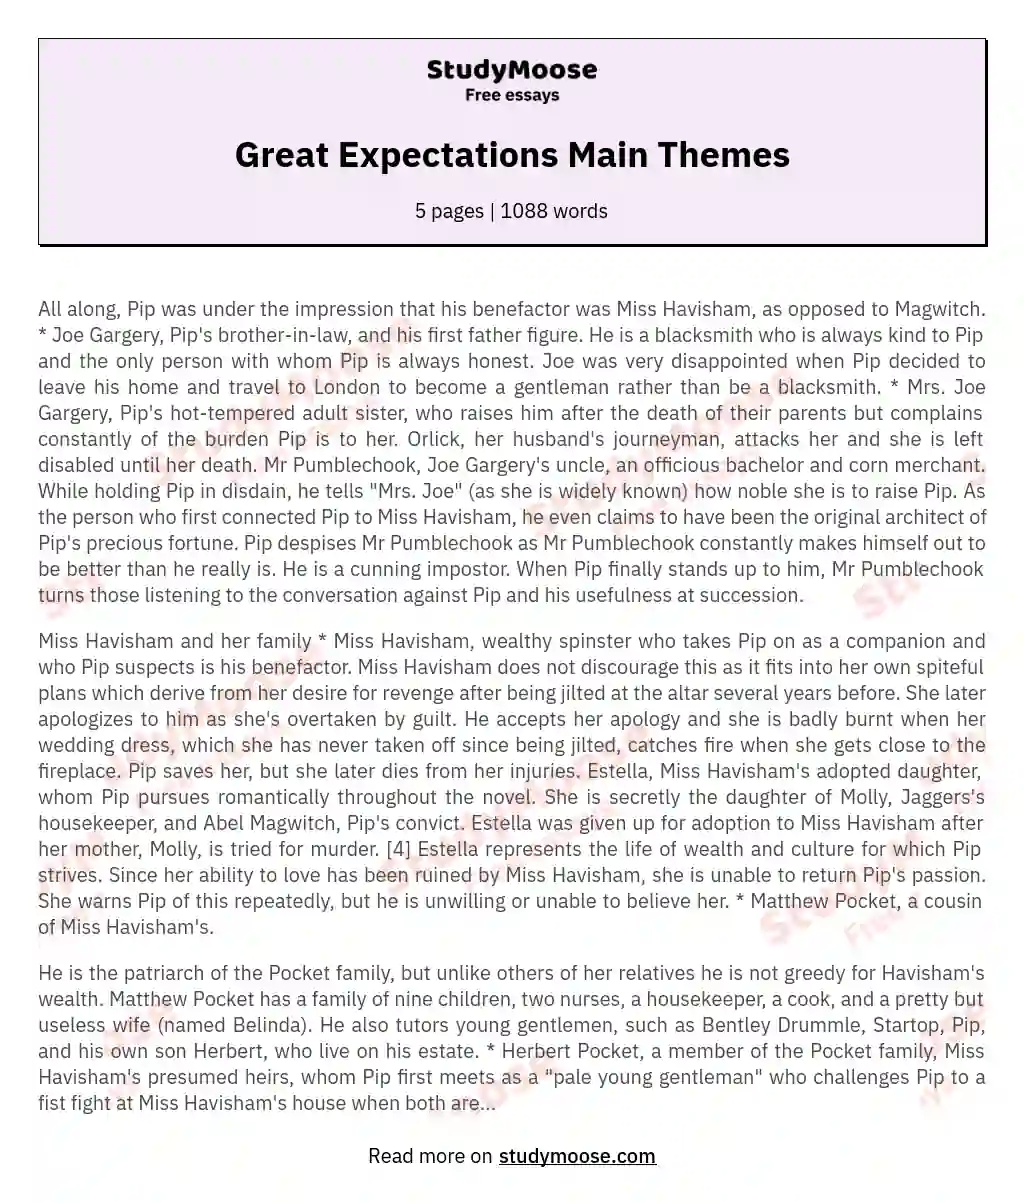 Great Expectations Main Themes essay